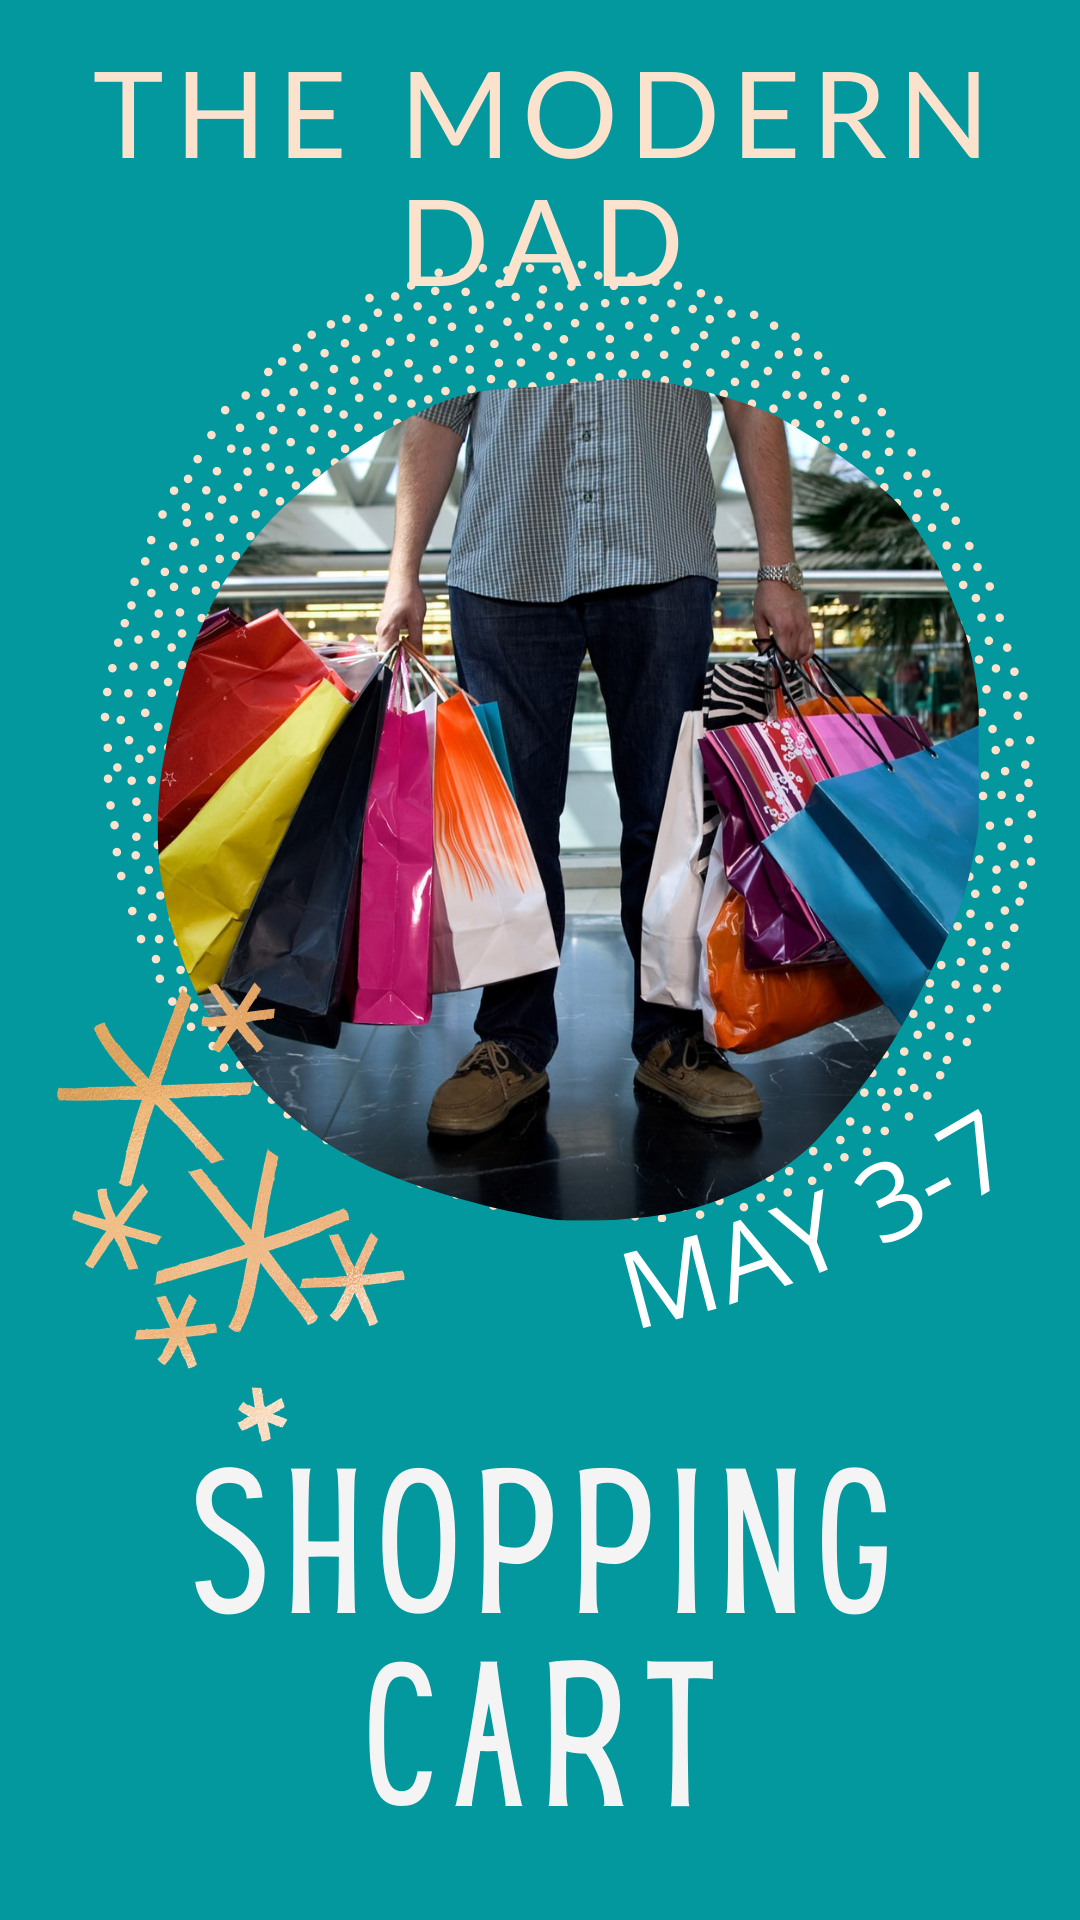 The Modern Dad Shopping Cart | May 3-7